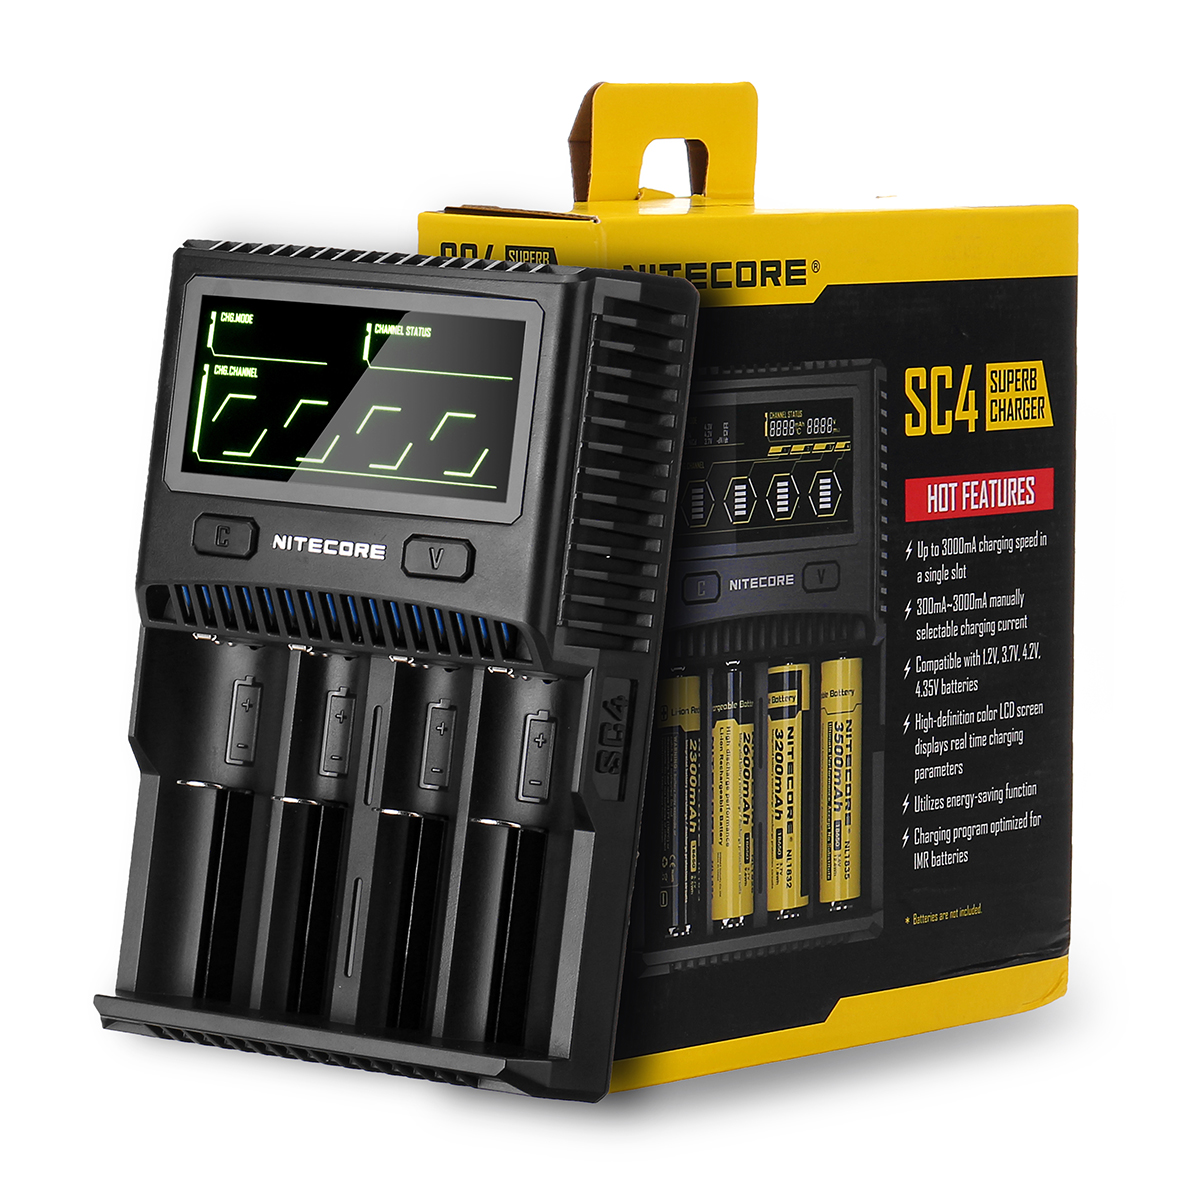 

Nitecore SC4 3A 6A 4 Slot Super Battery Charger for Li-ion IMR LiFePO4 10340 10350 10440 10500 12340 12500 C D Batteries